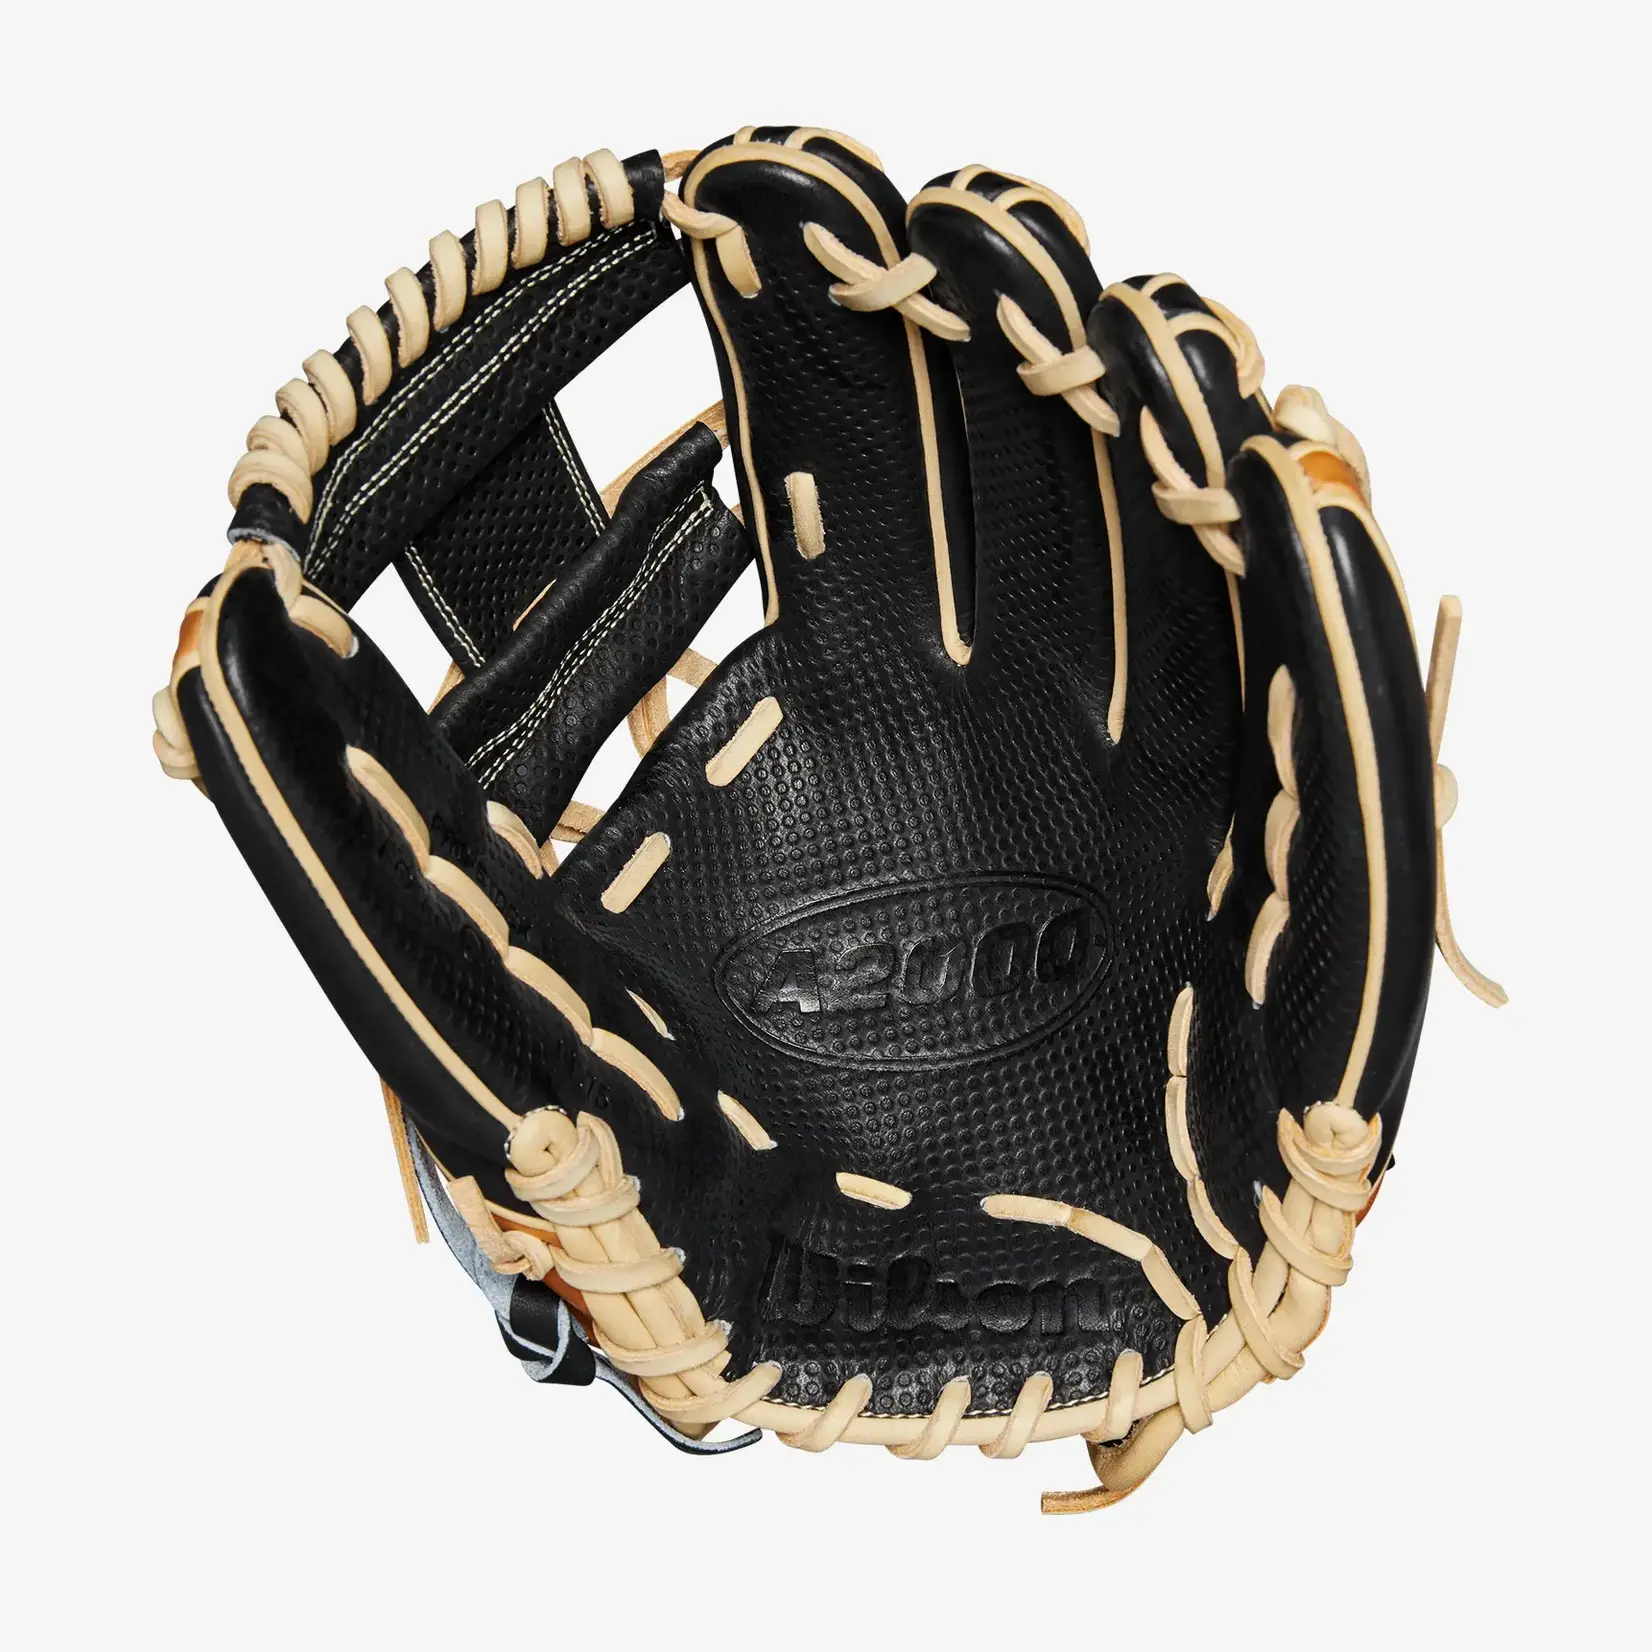 Wilson Wilson Baseball Glove, A2000 Spin Control 1787, Reg, 11.75", Infield Pattern, Blk/Saddle Tan/Blonde